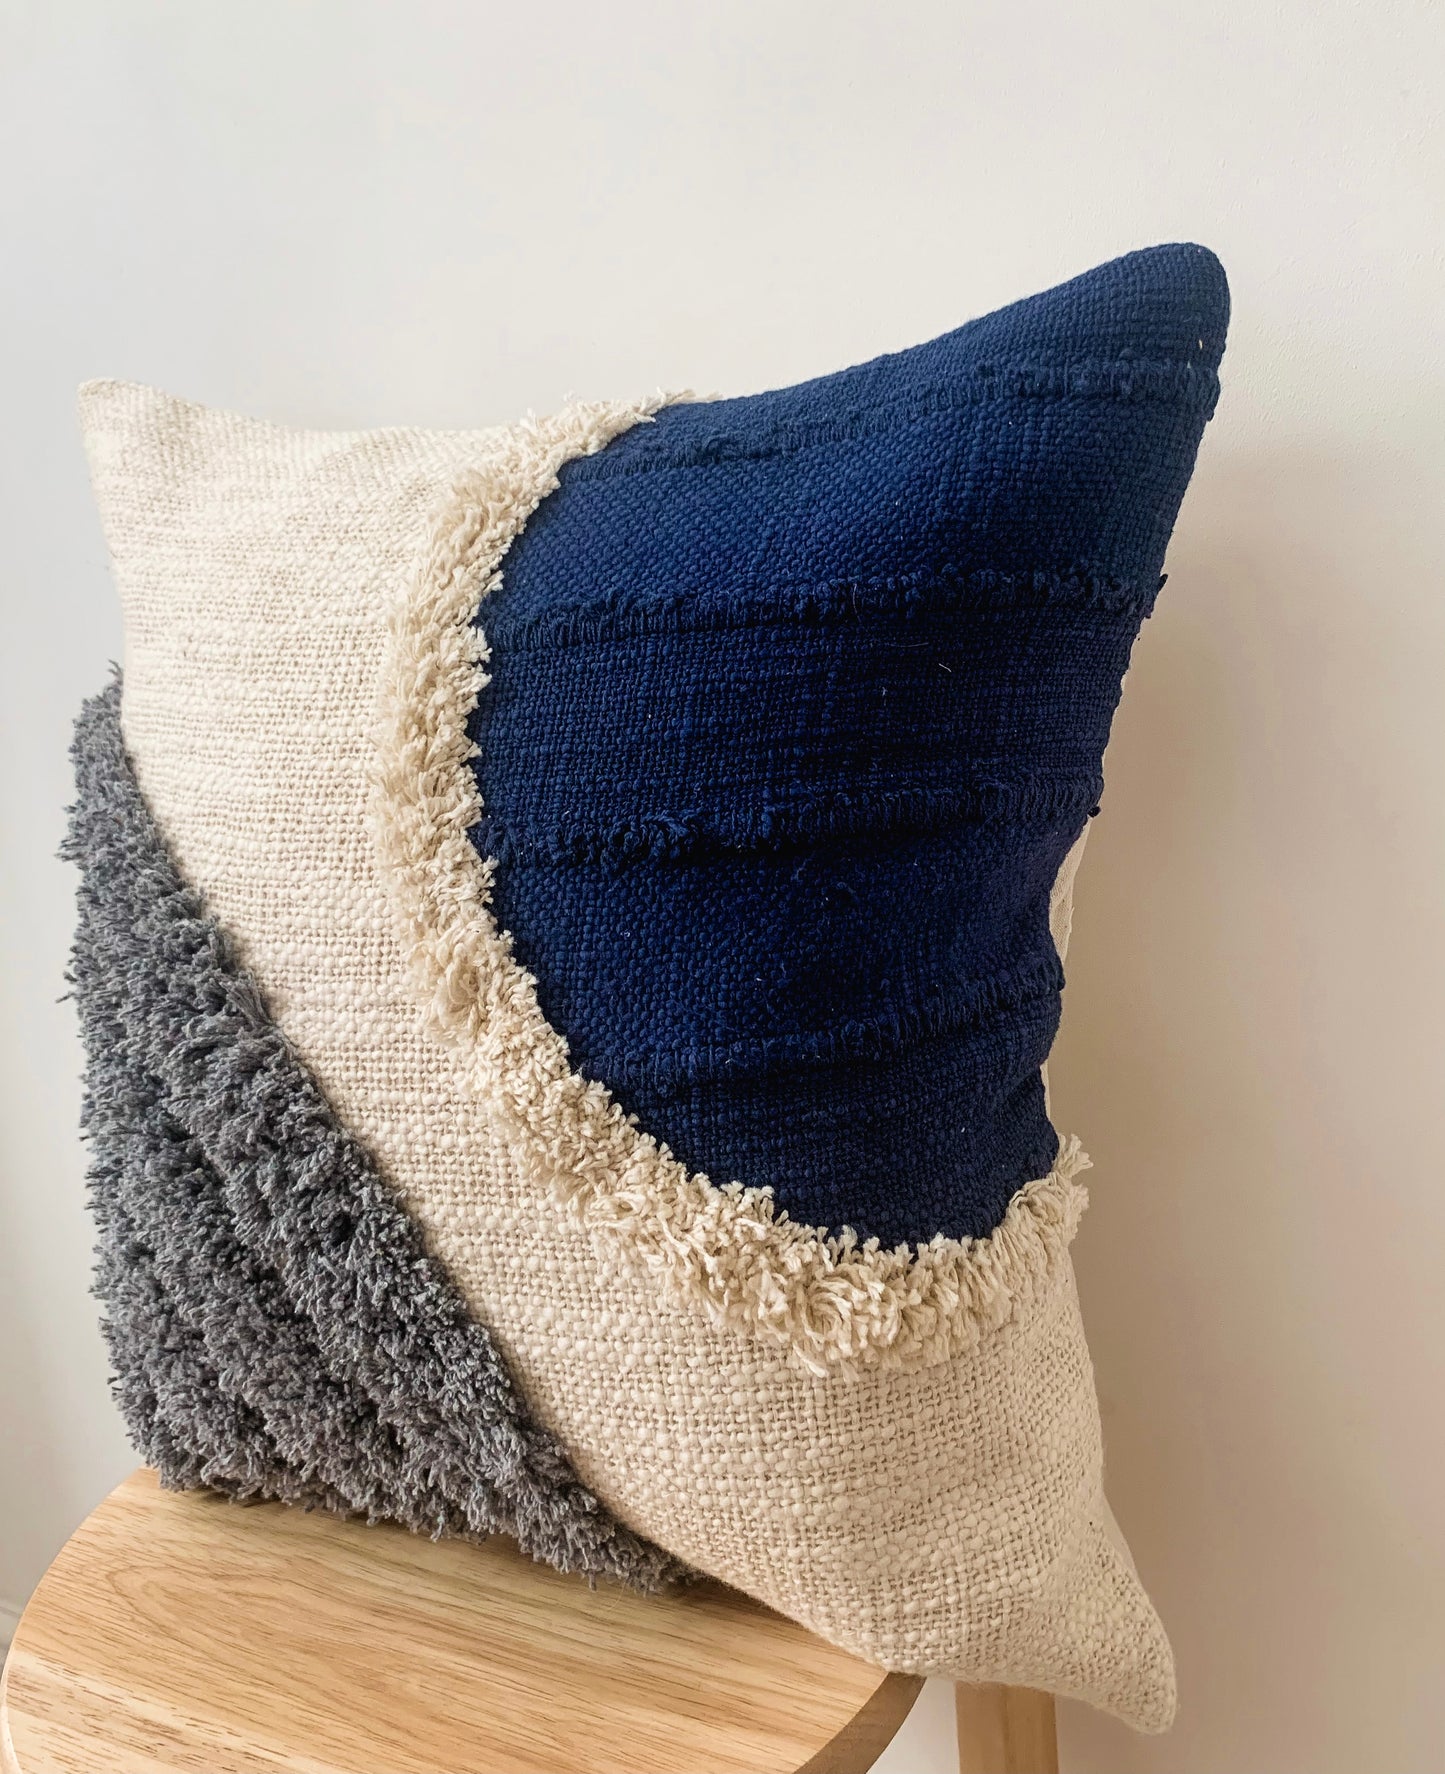 Beige and Blue Tufted Cotton Cushion Cover 45 x 45cm - Blair